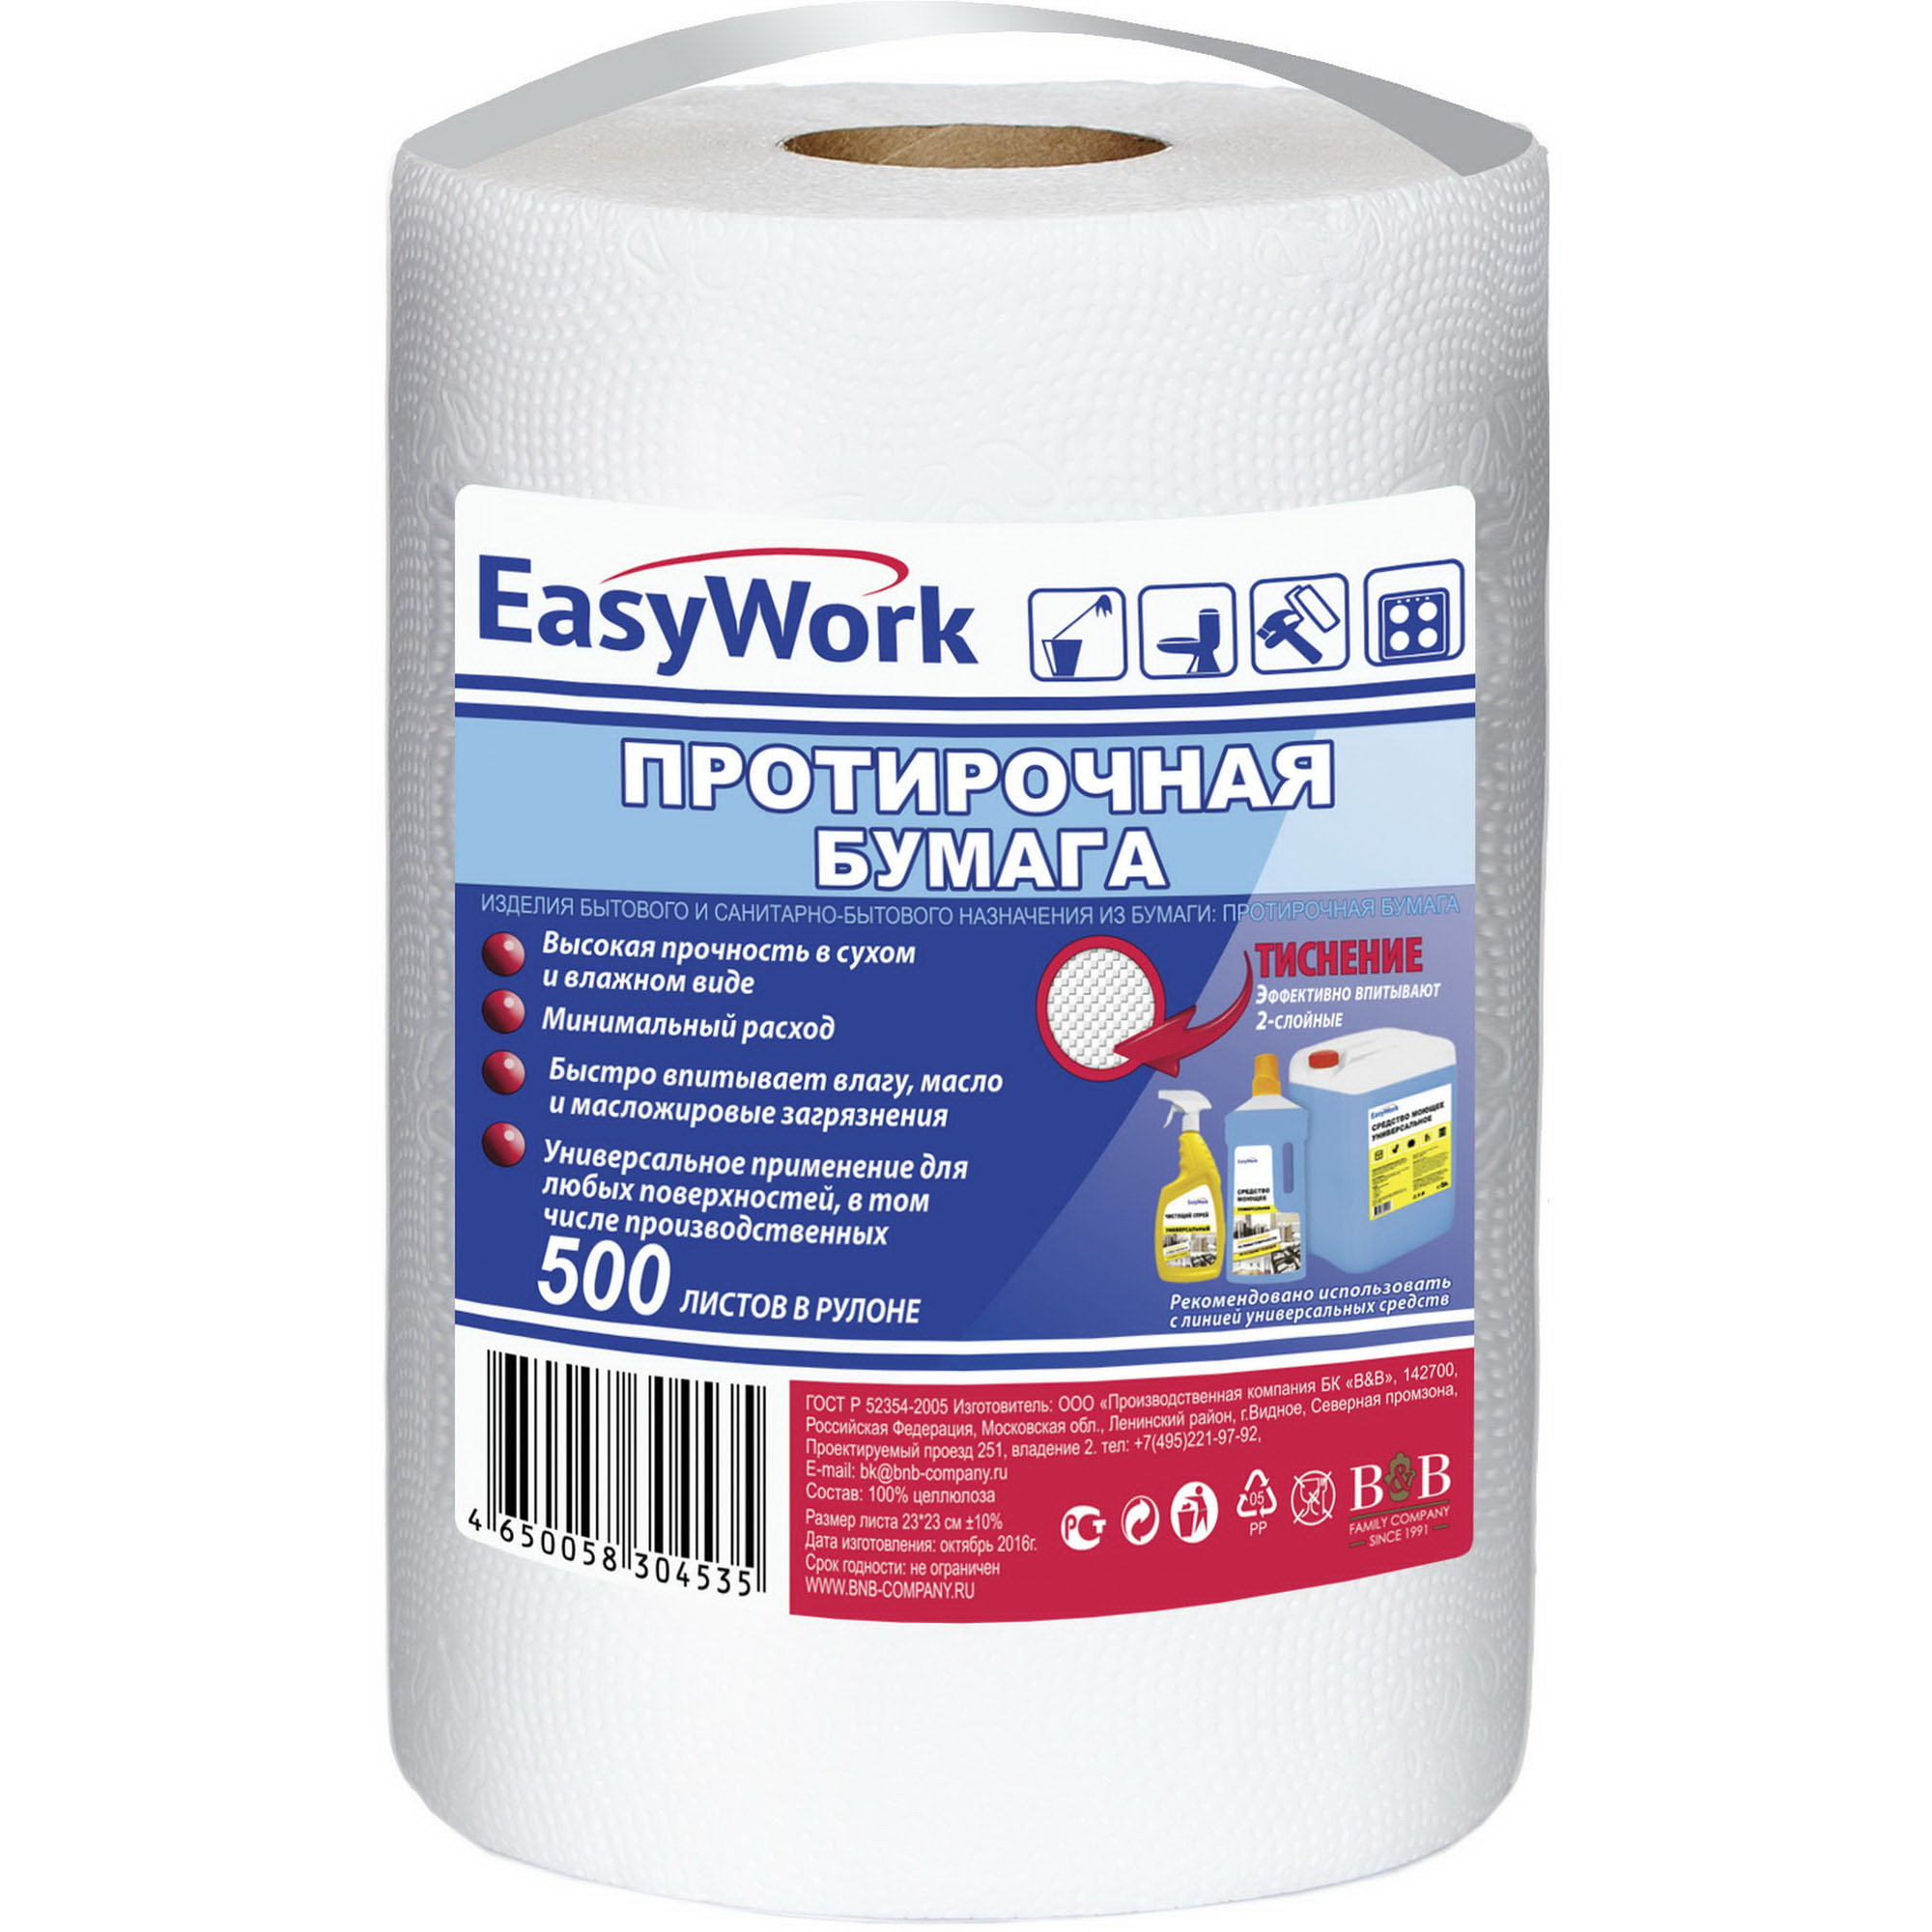 Протирочная бумага EasyWork 304535 рулон 500 листов